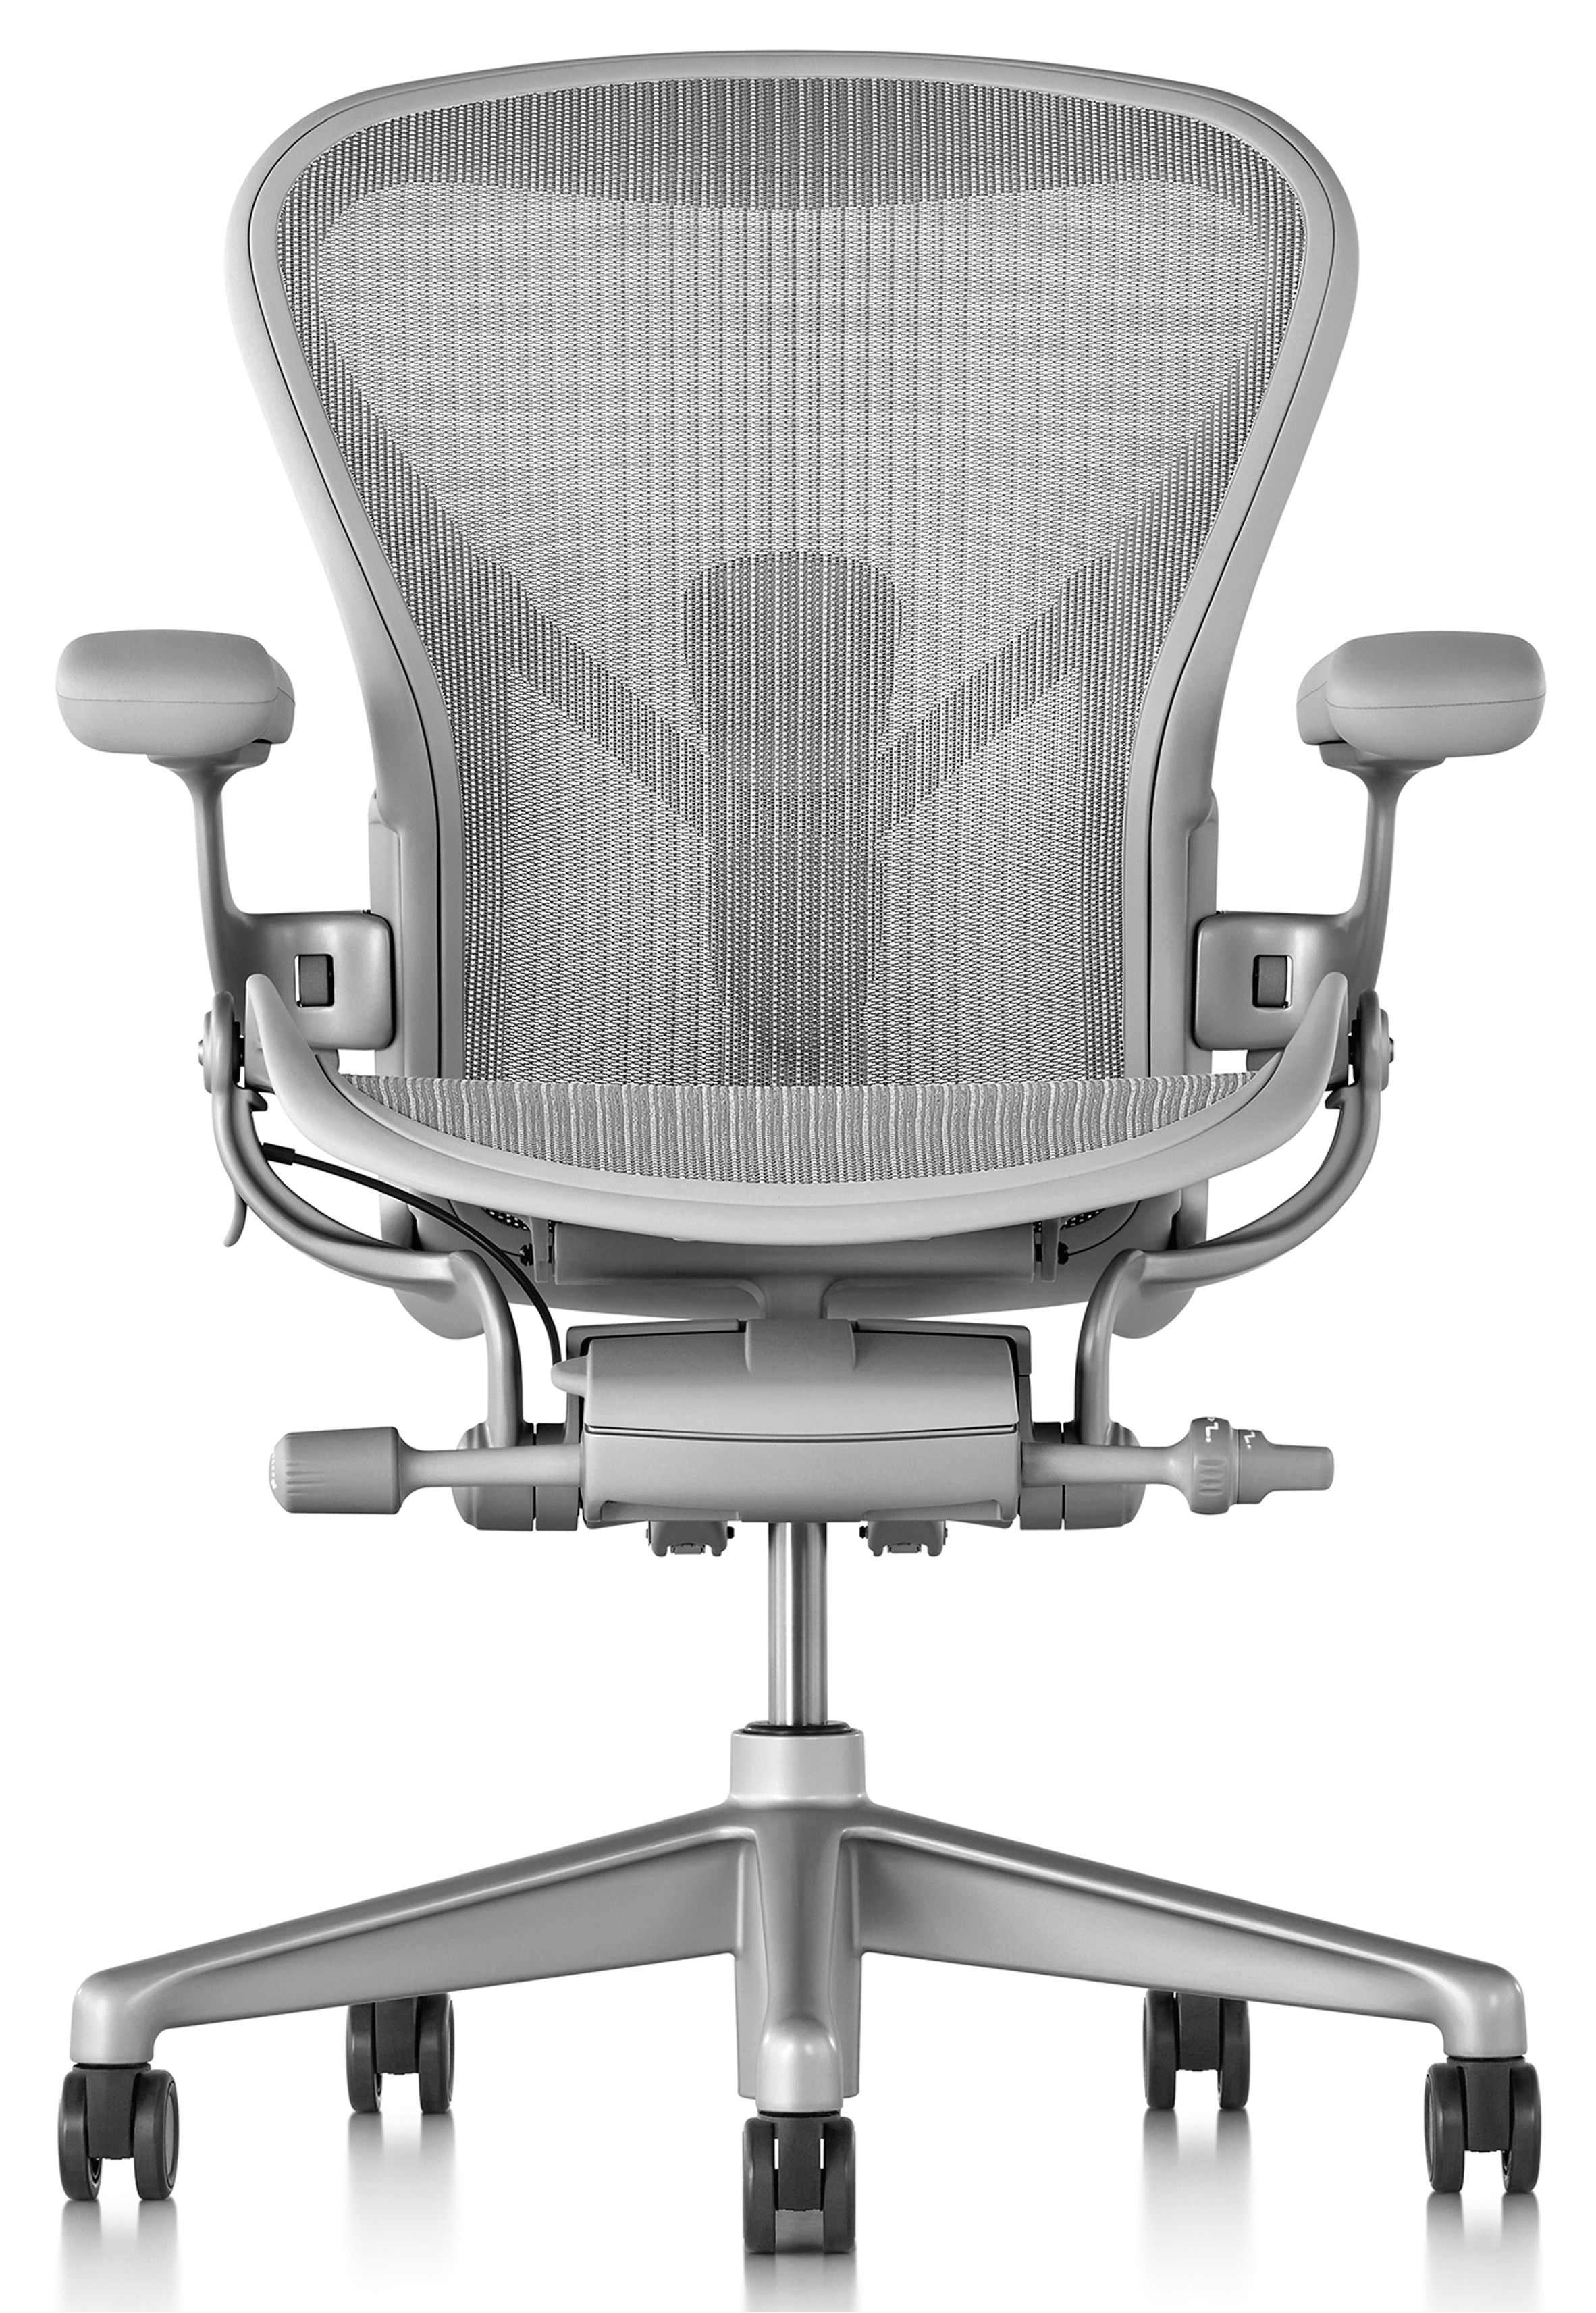 Herman Miller Aeron Office Chair Sizes Herman Miller Updates Iconic Aeron Office Chair Pinterest Office